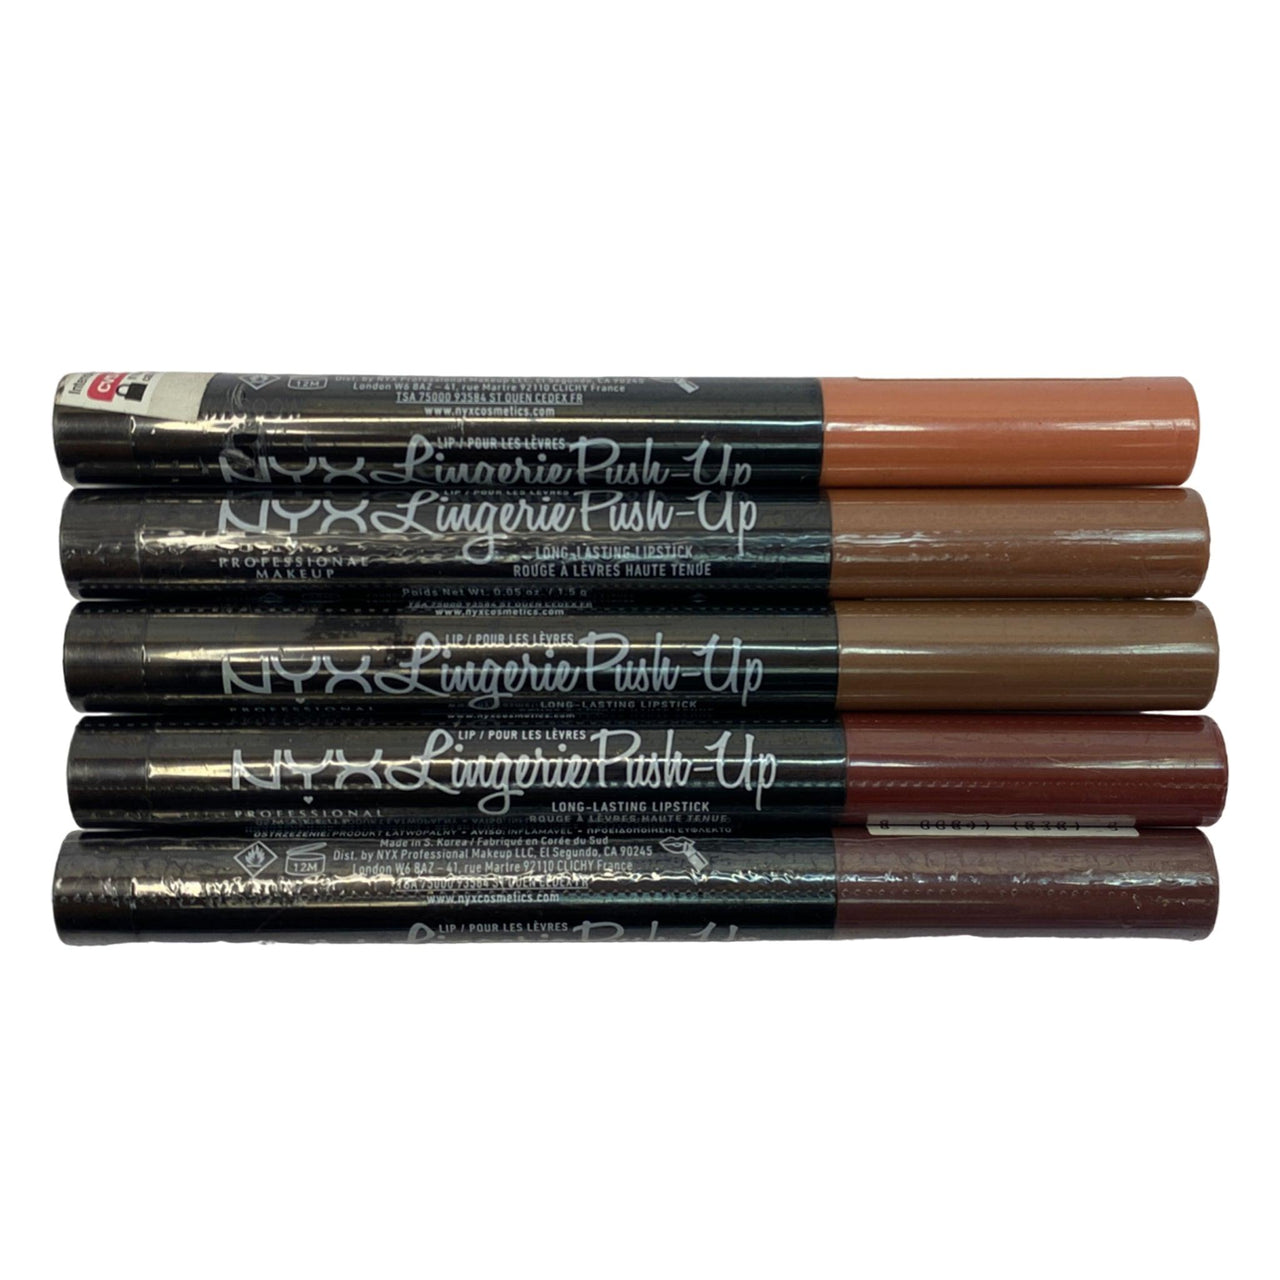 NYX Lingerie Push-Up Long Lasting Lipsticks Assorted (50 Pcs Box) - Discount Wholesalers Inc